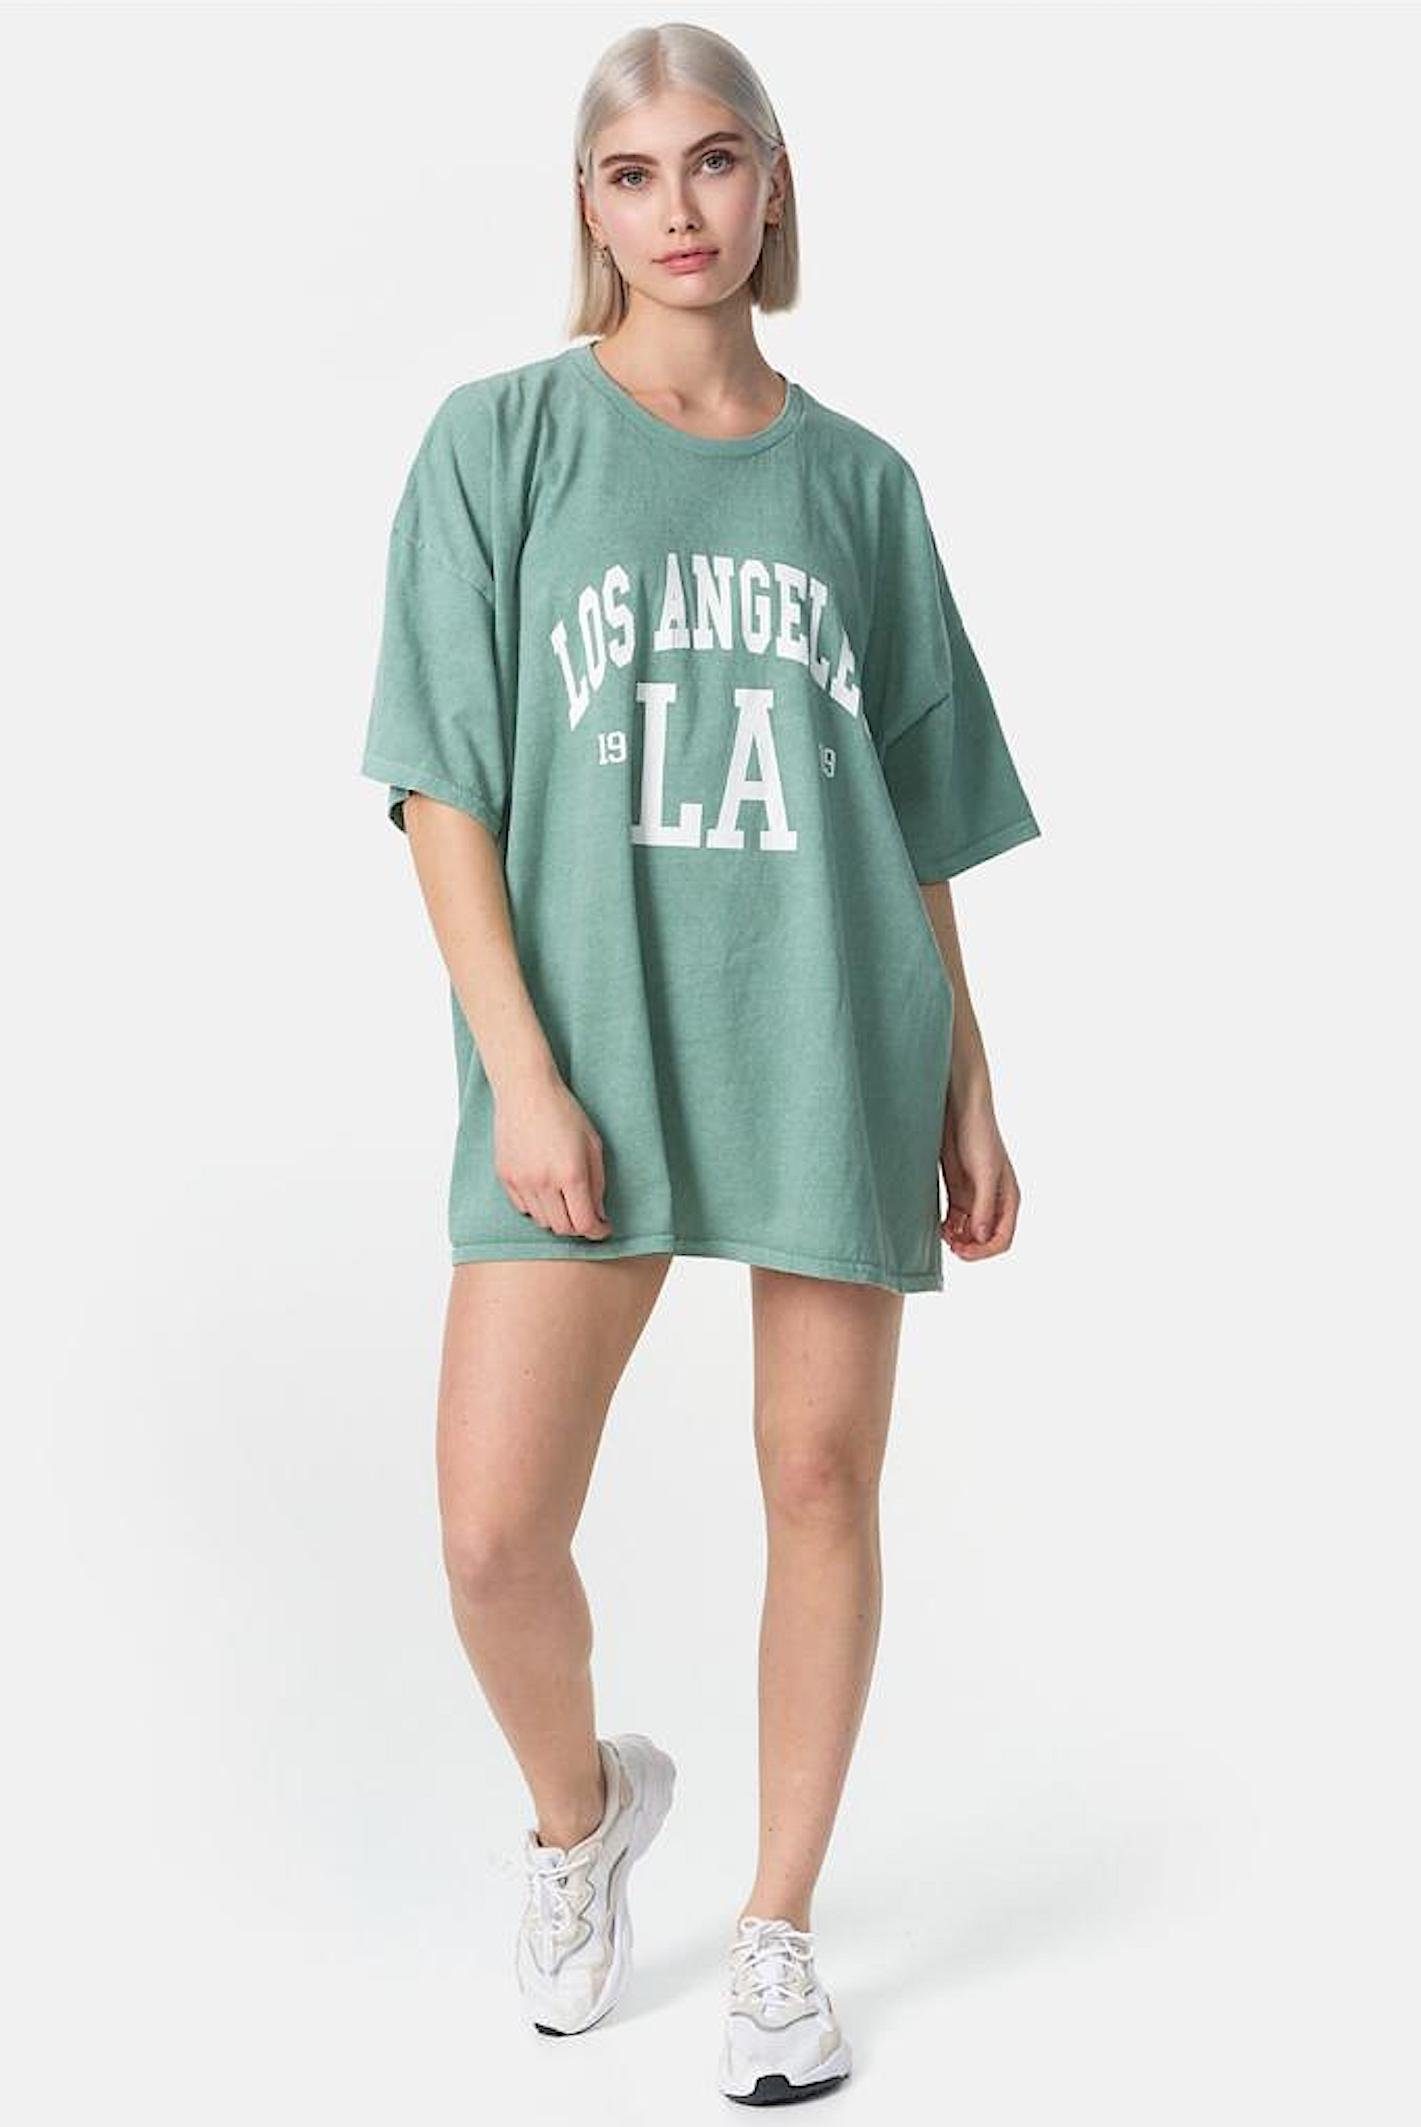 Worldclassca LA Tee Worldclassca lang T-Shirt ANGELES Print T-Shirt Oversized Mint LOS Sommer